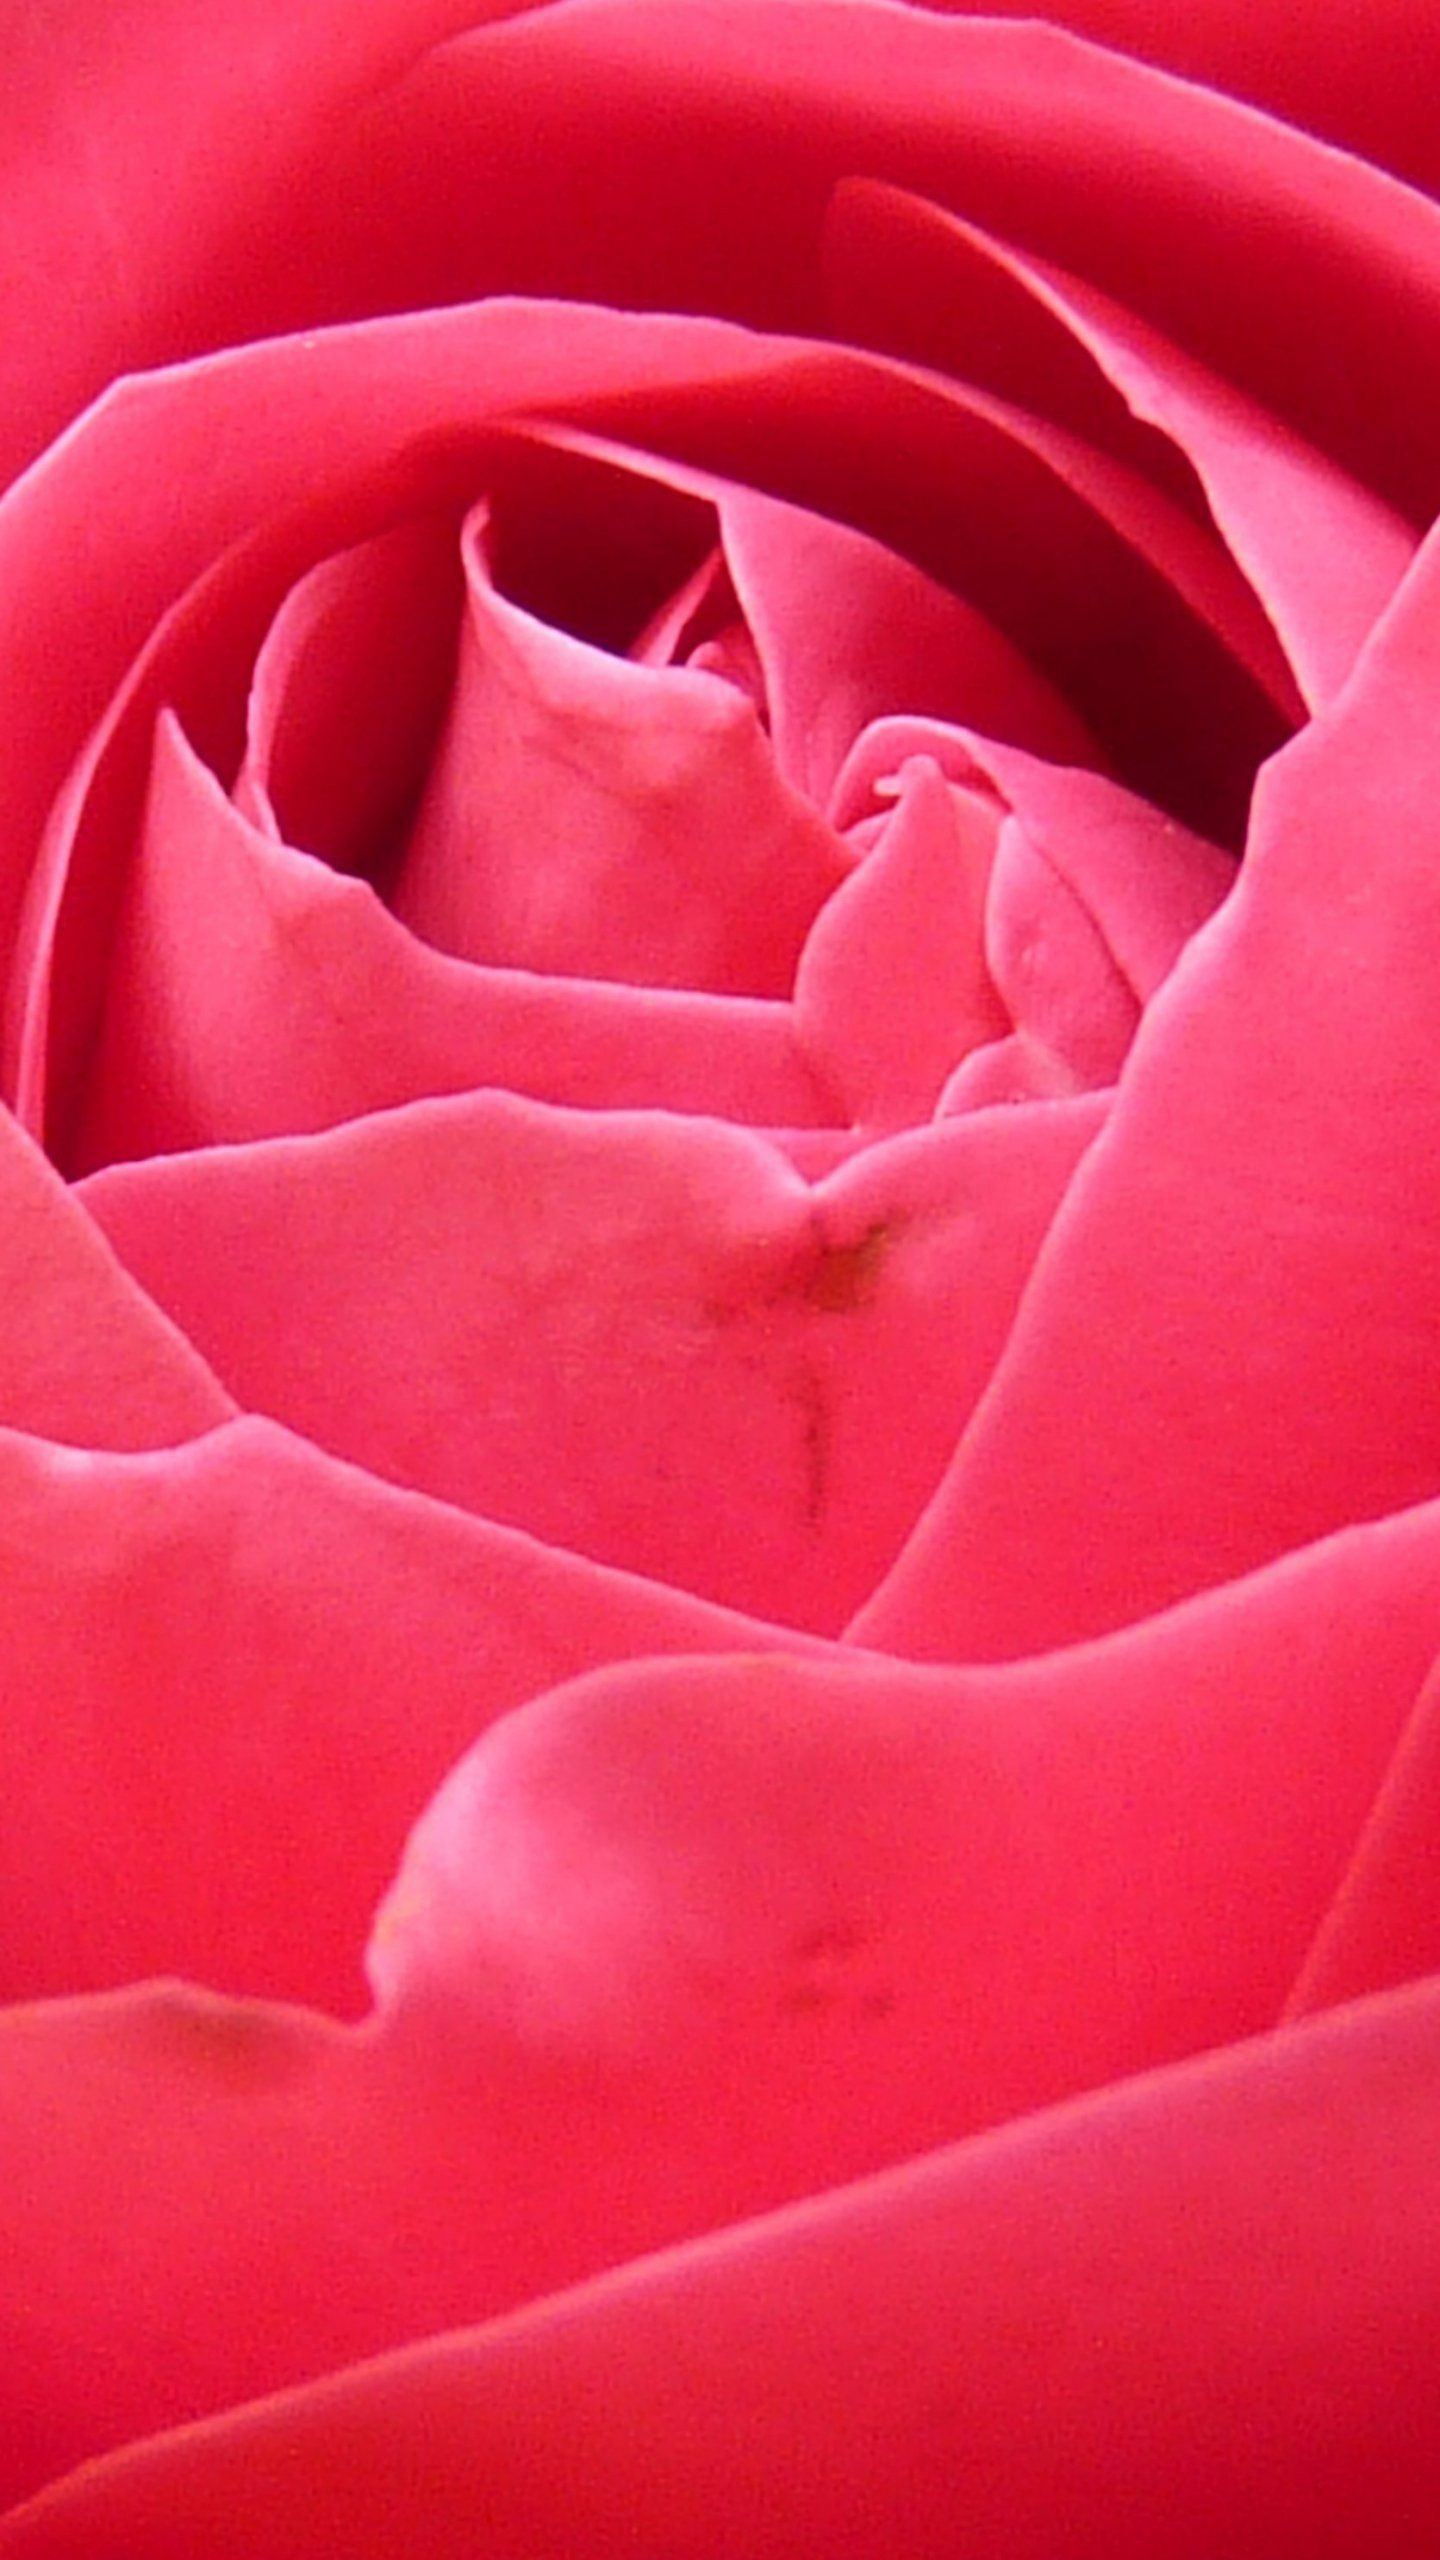 1440x2560 Bright Pink Rose Closeup Wallpaper iPhone, Android \u0026 Desktop Backgrounds | Beautiful flowers wallpapers, Flower phone wallpaper, Flower iphone wallpaper